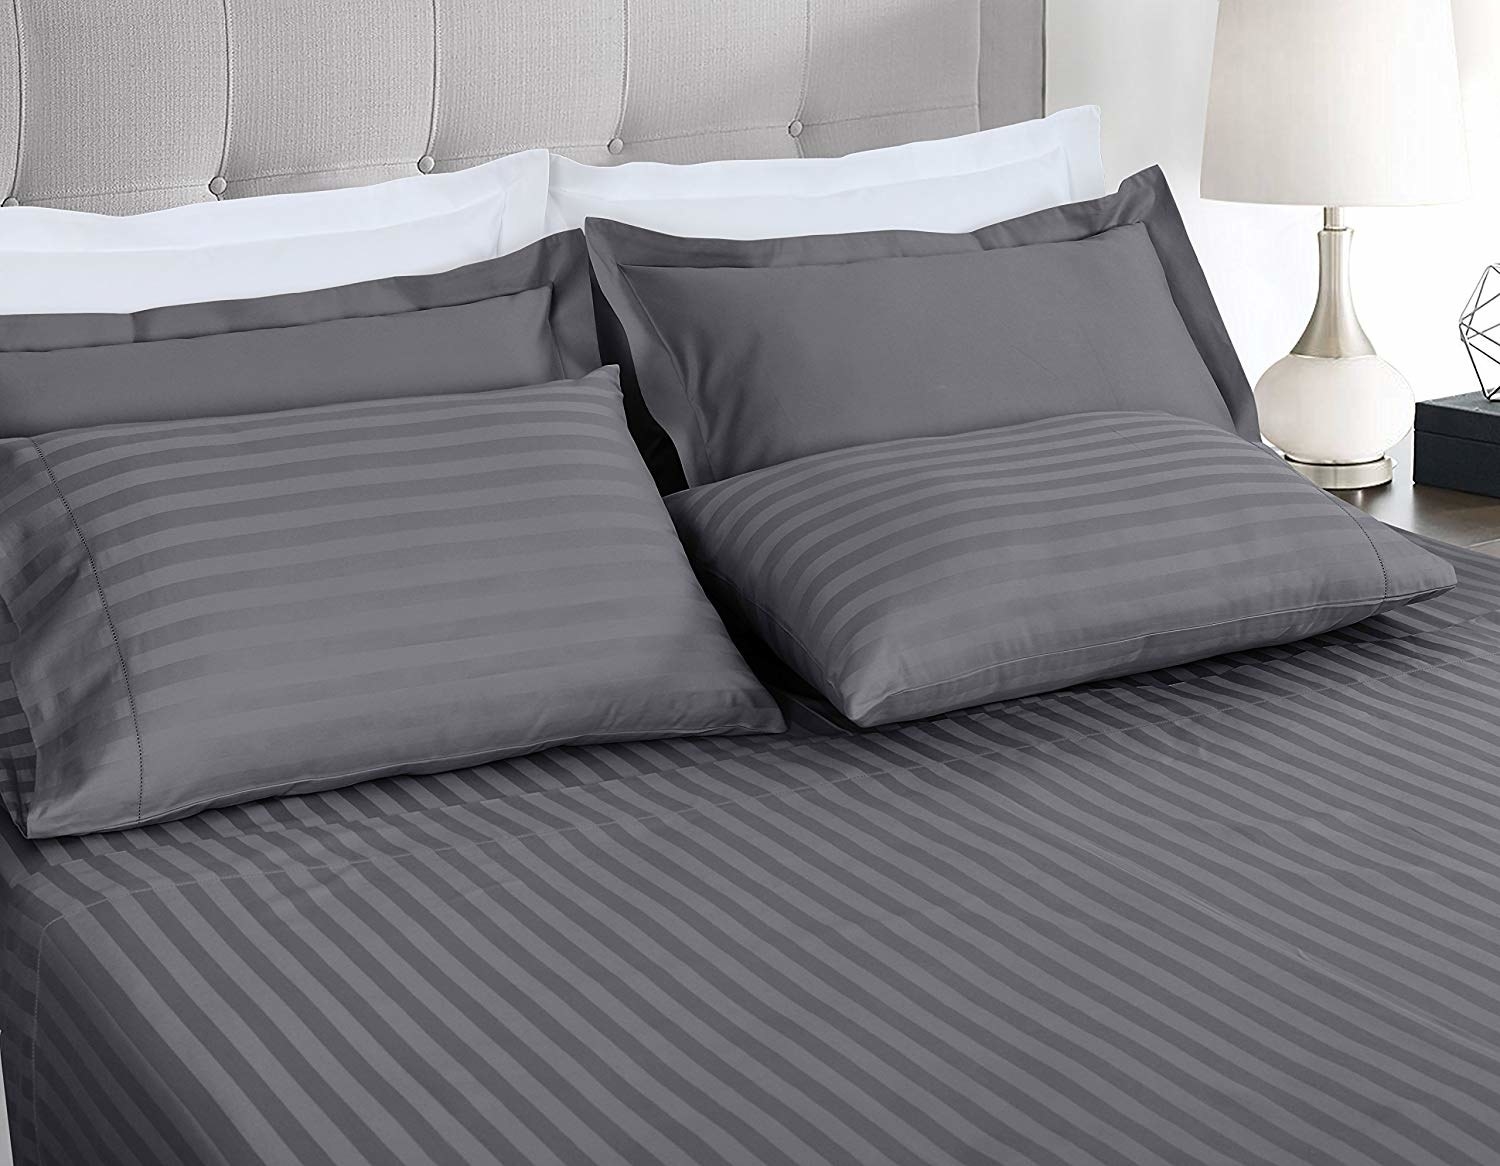 Sara Bedding 100% Egyptian Cotton 700 Thread Count Only 1-Piece Flat Sheet Twin XL Size Stripe Colure Black